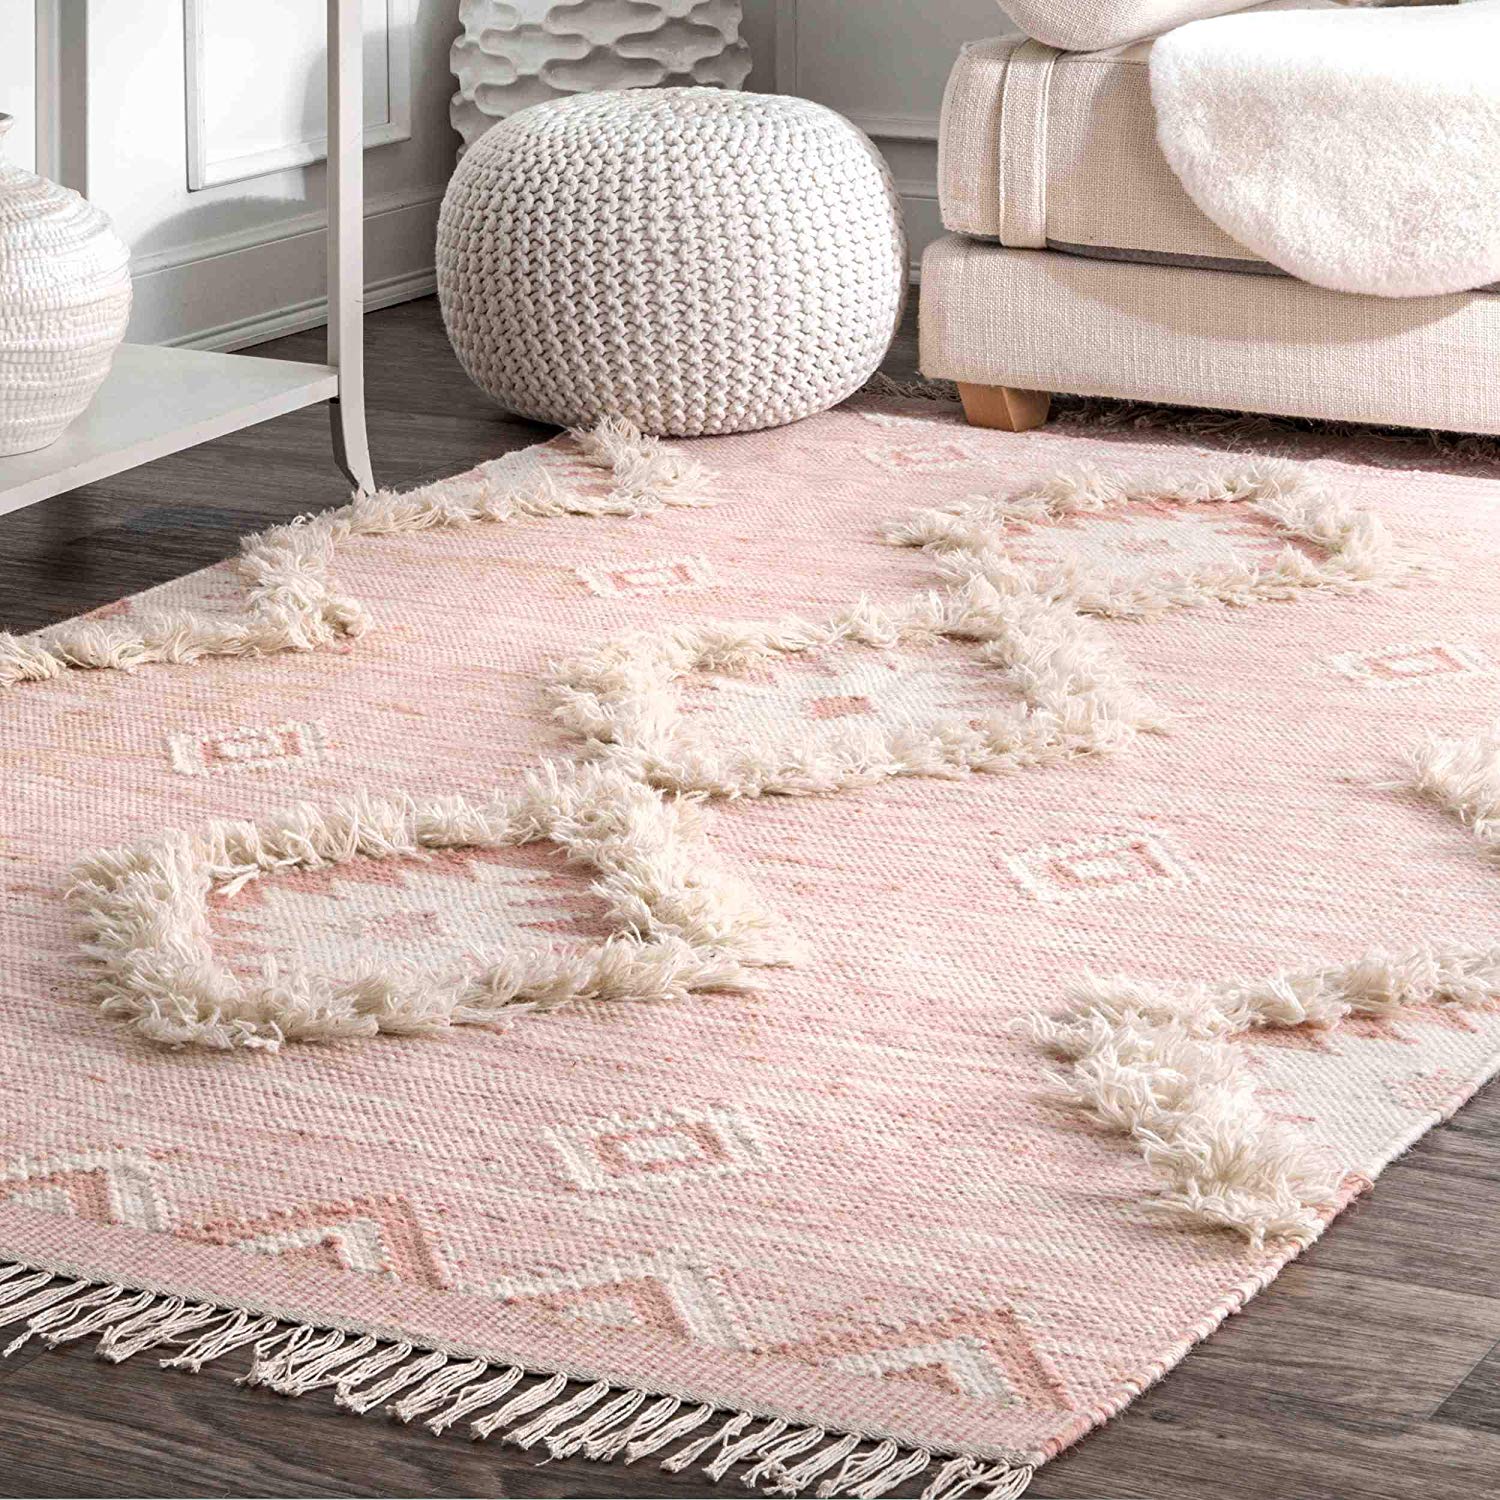 pink bohemian scandinavian area rug with tassels